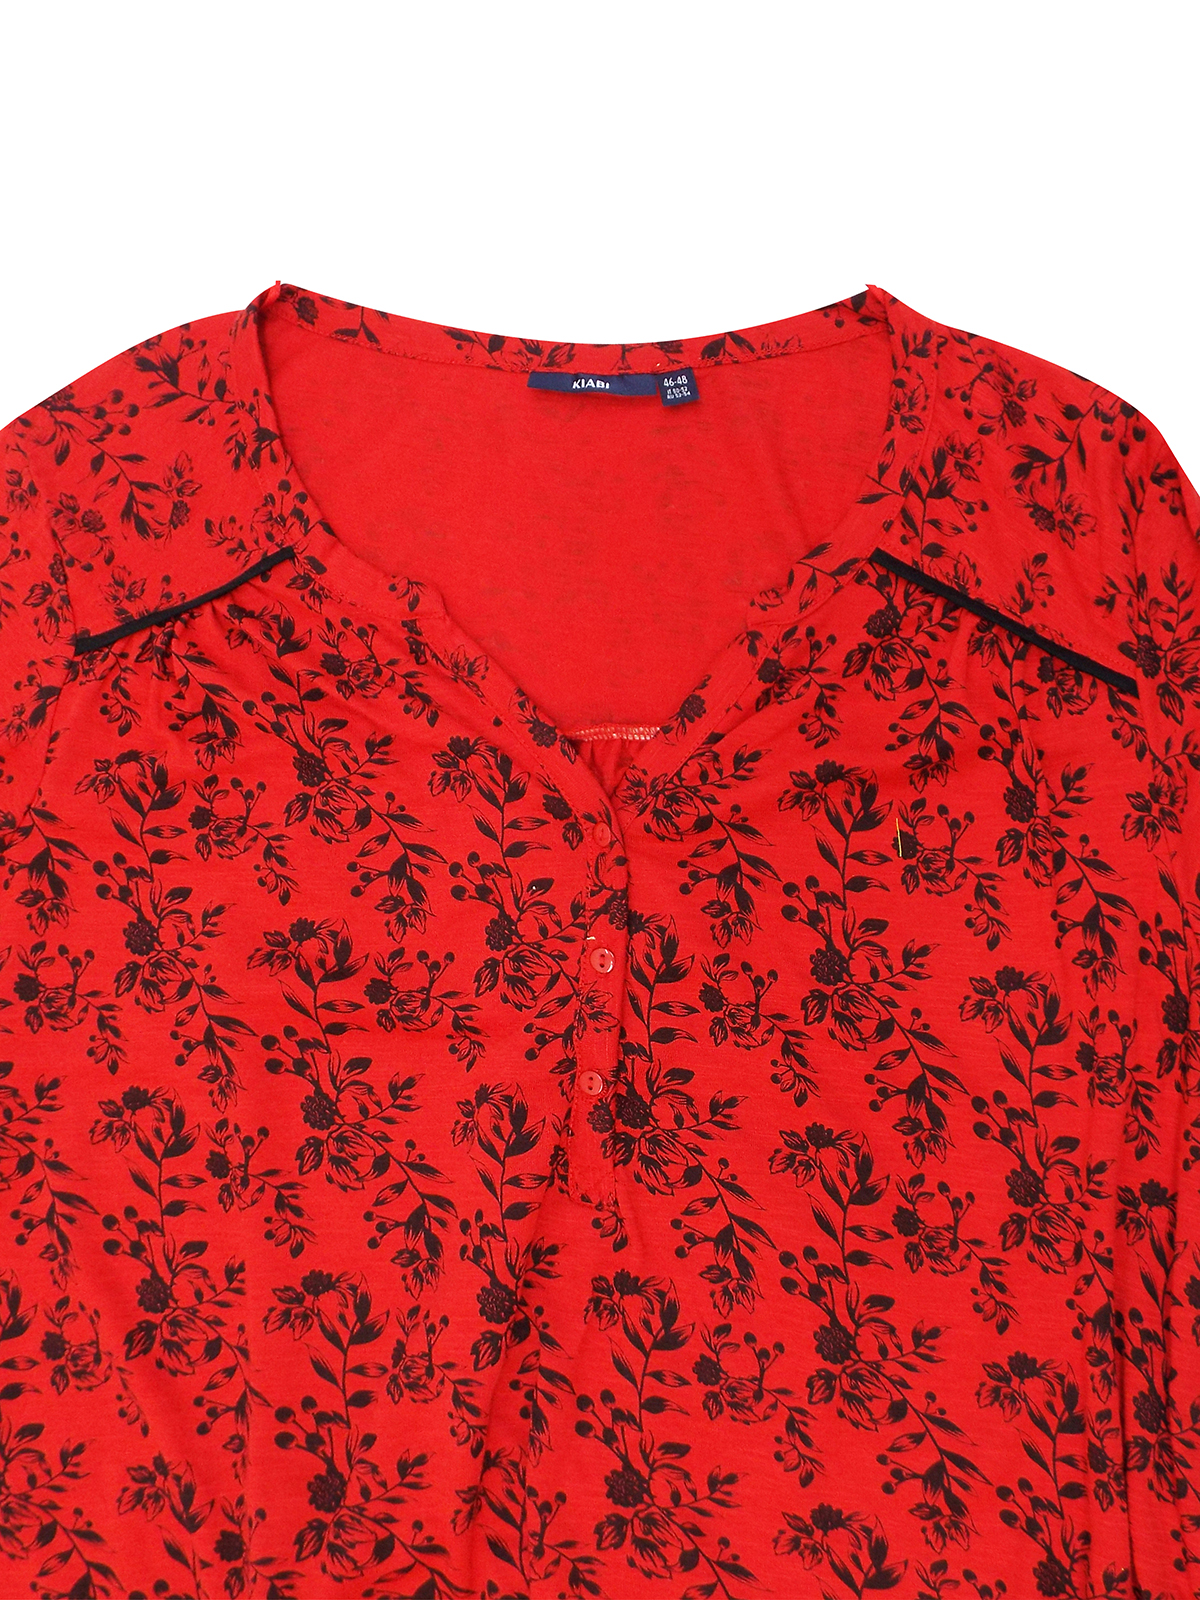 KIABI - - Kiabi RED Black Floral Print Cotton Rich Henley Tee Top ...